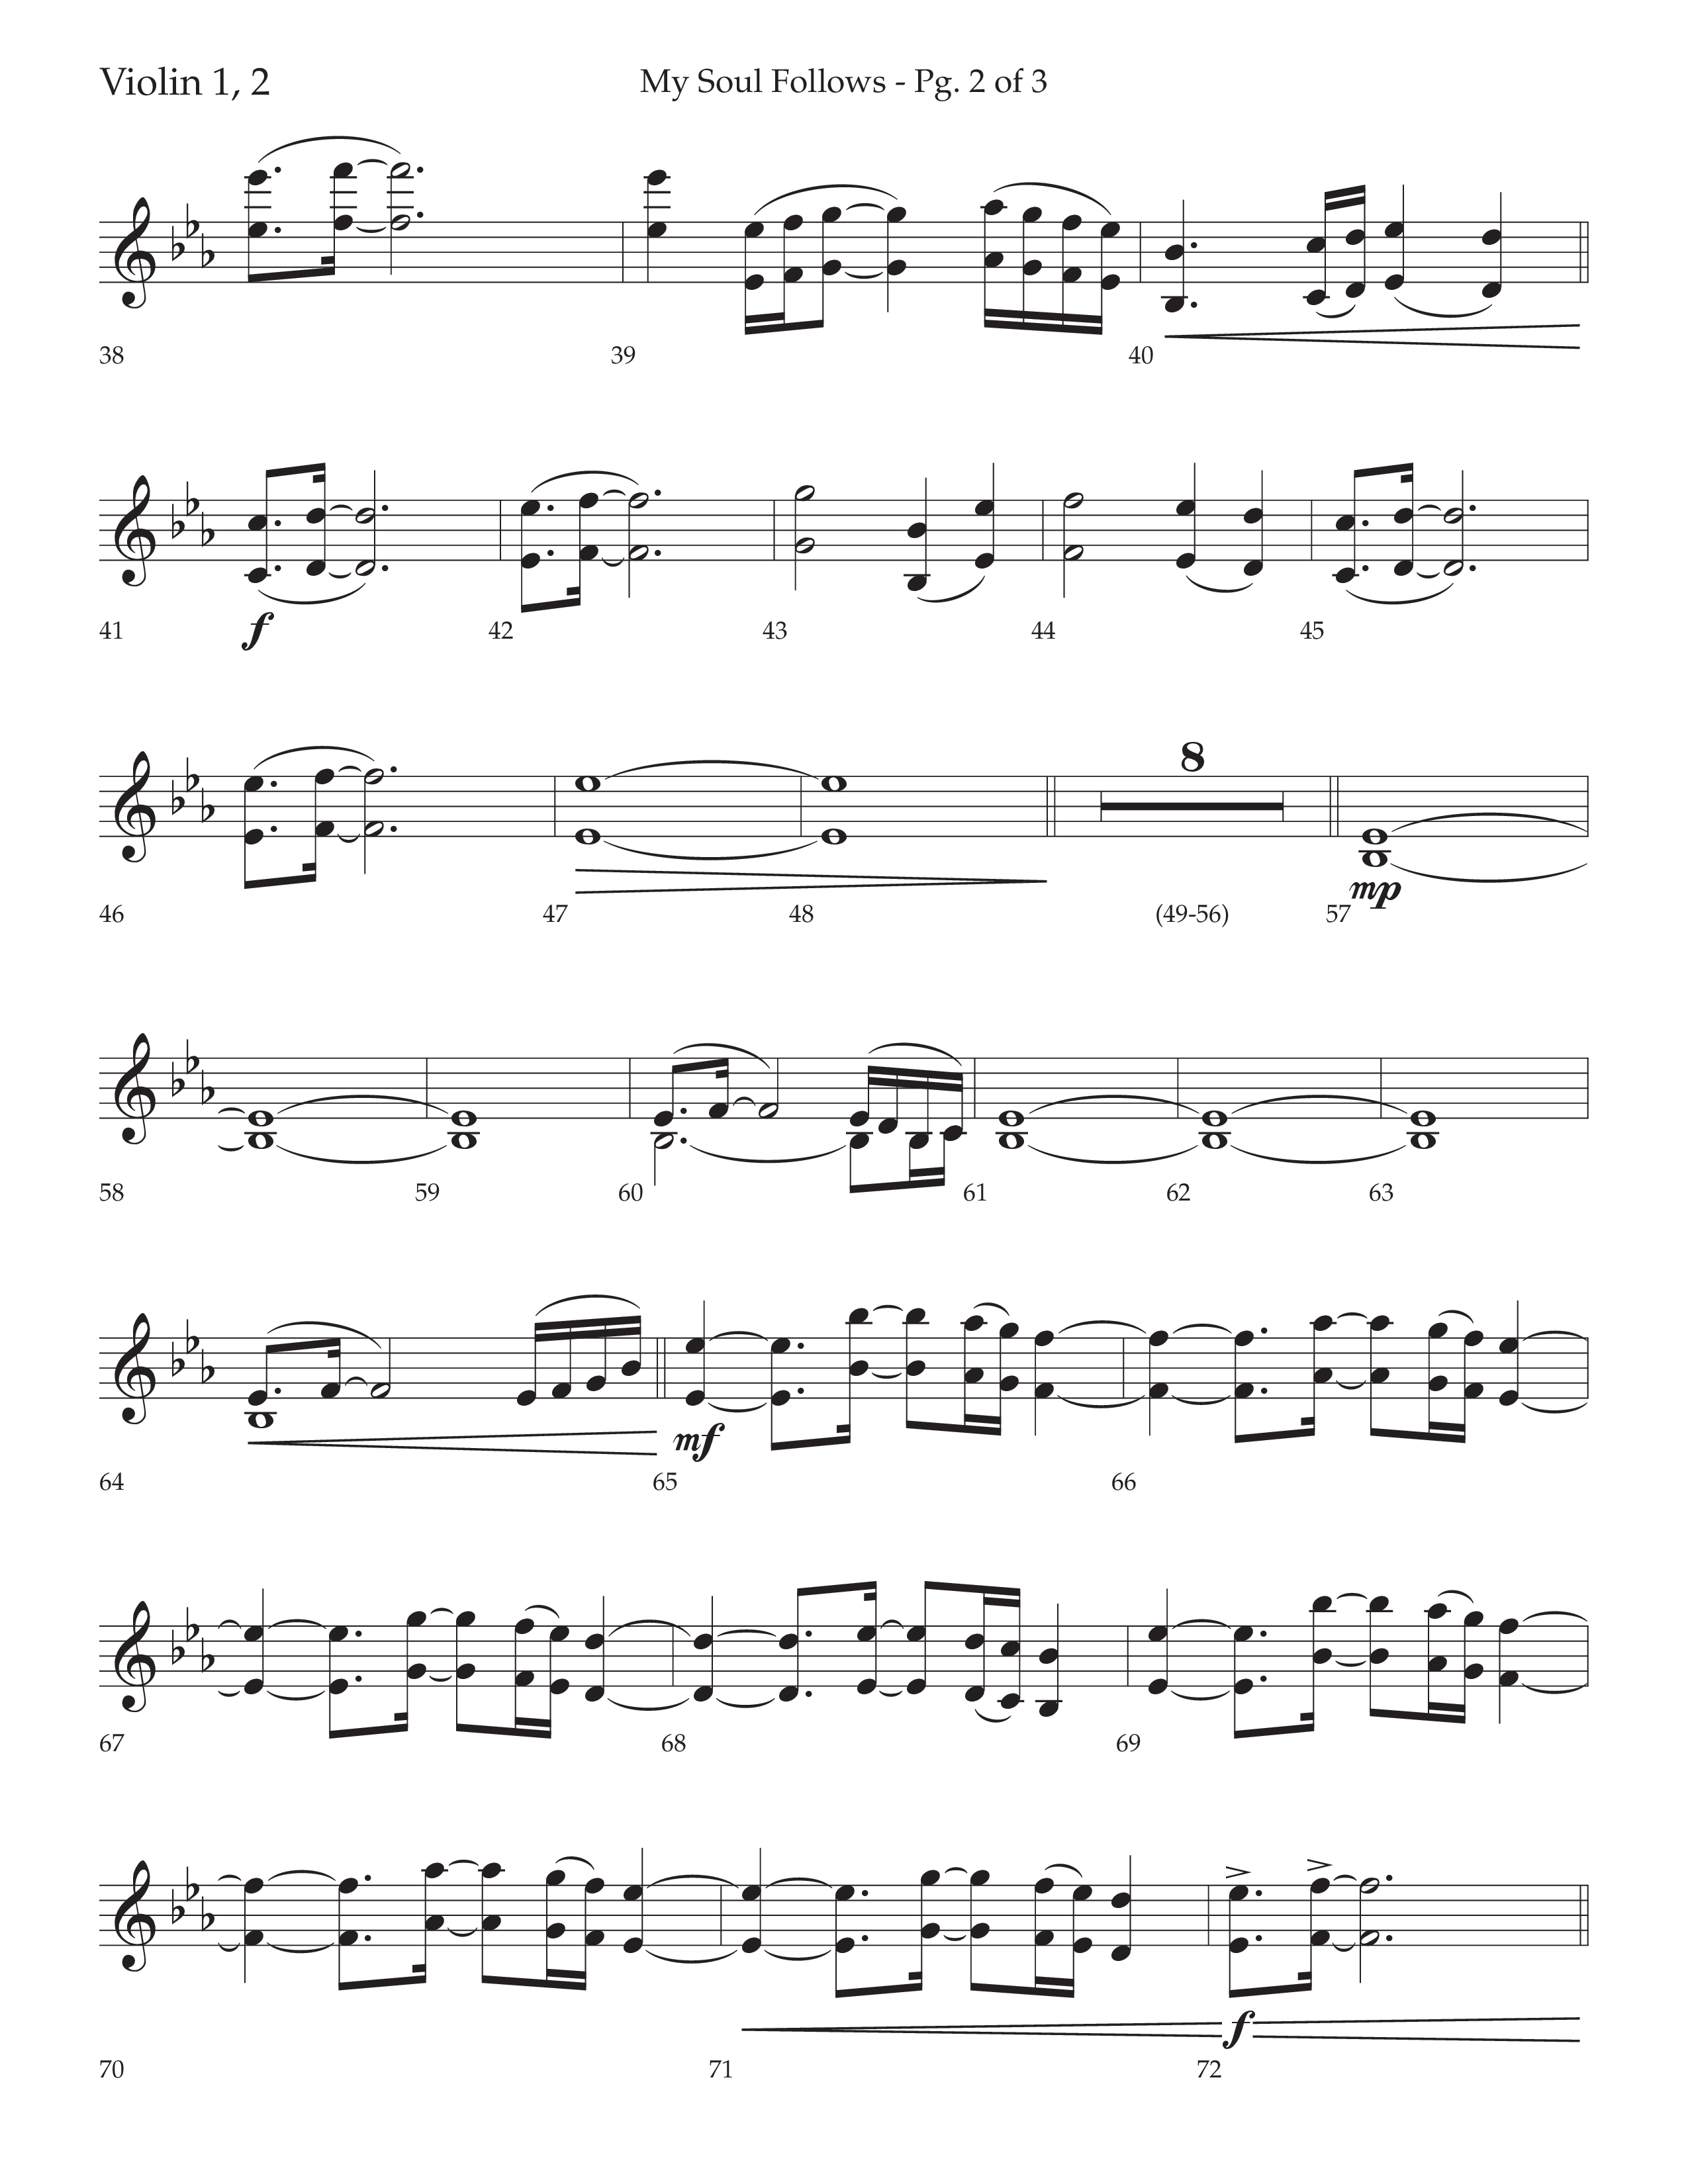 My Soul Follows (Choral Anthem SATB) Violin 1/2 (Lifeway Choral / Arr. Nick Robertson)